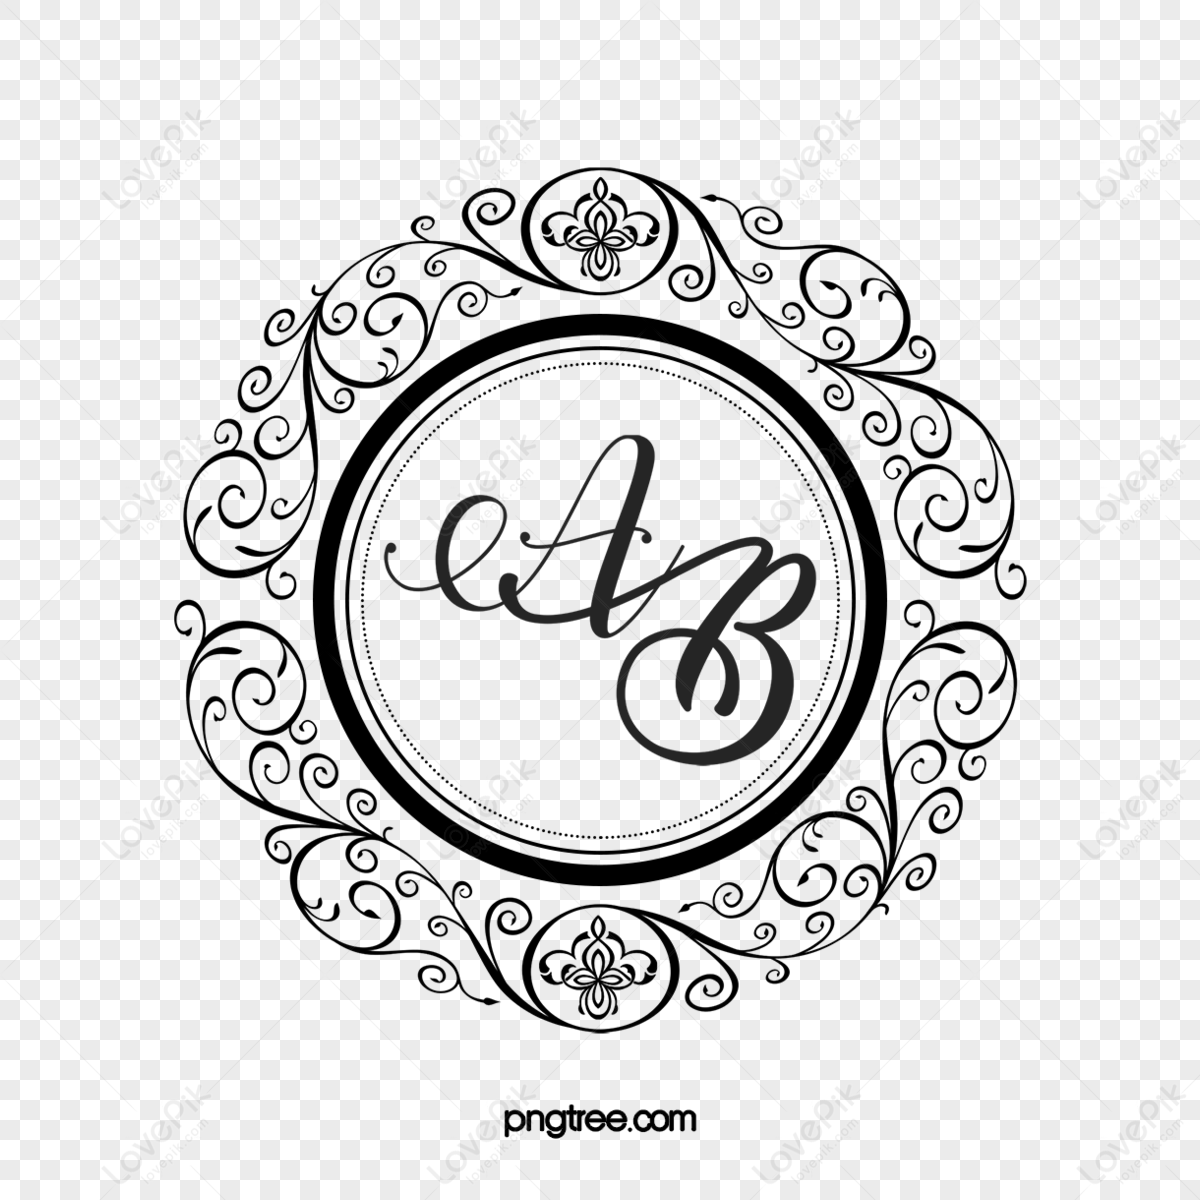 Mm initial wedding monogram logo Royalty Free Vector Image